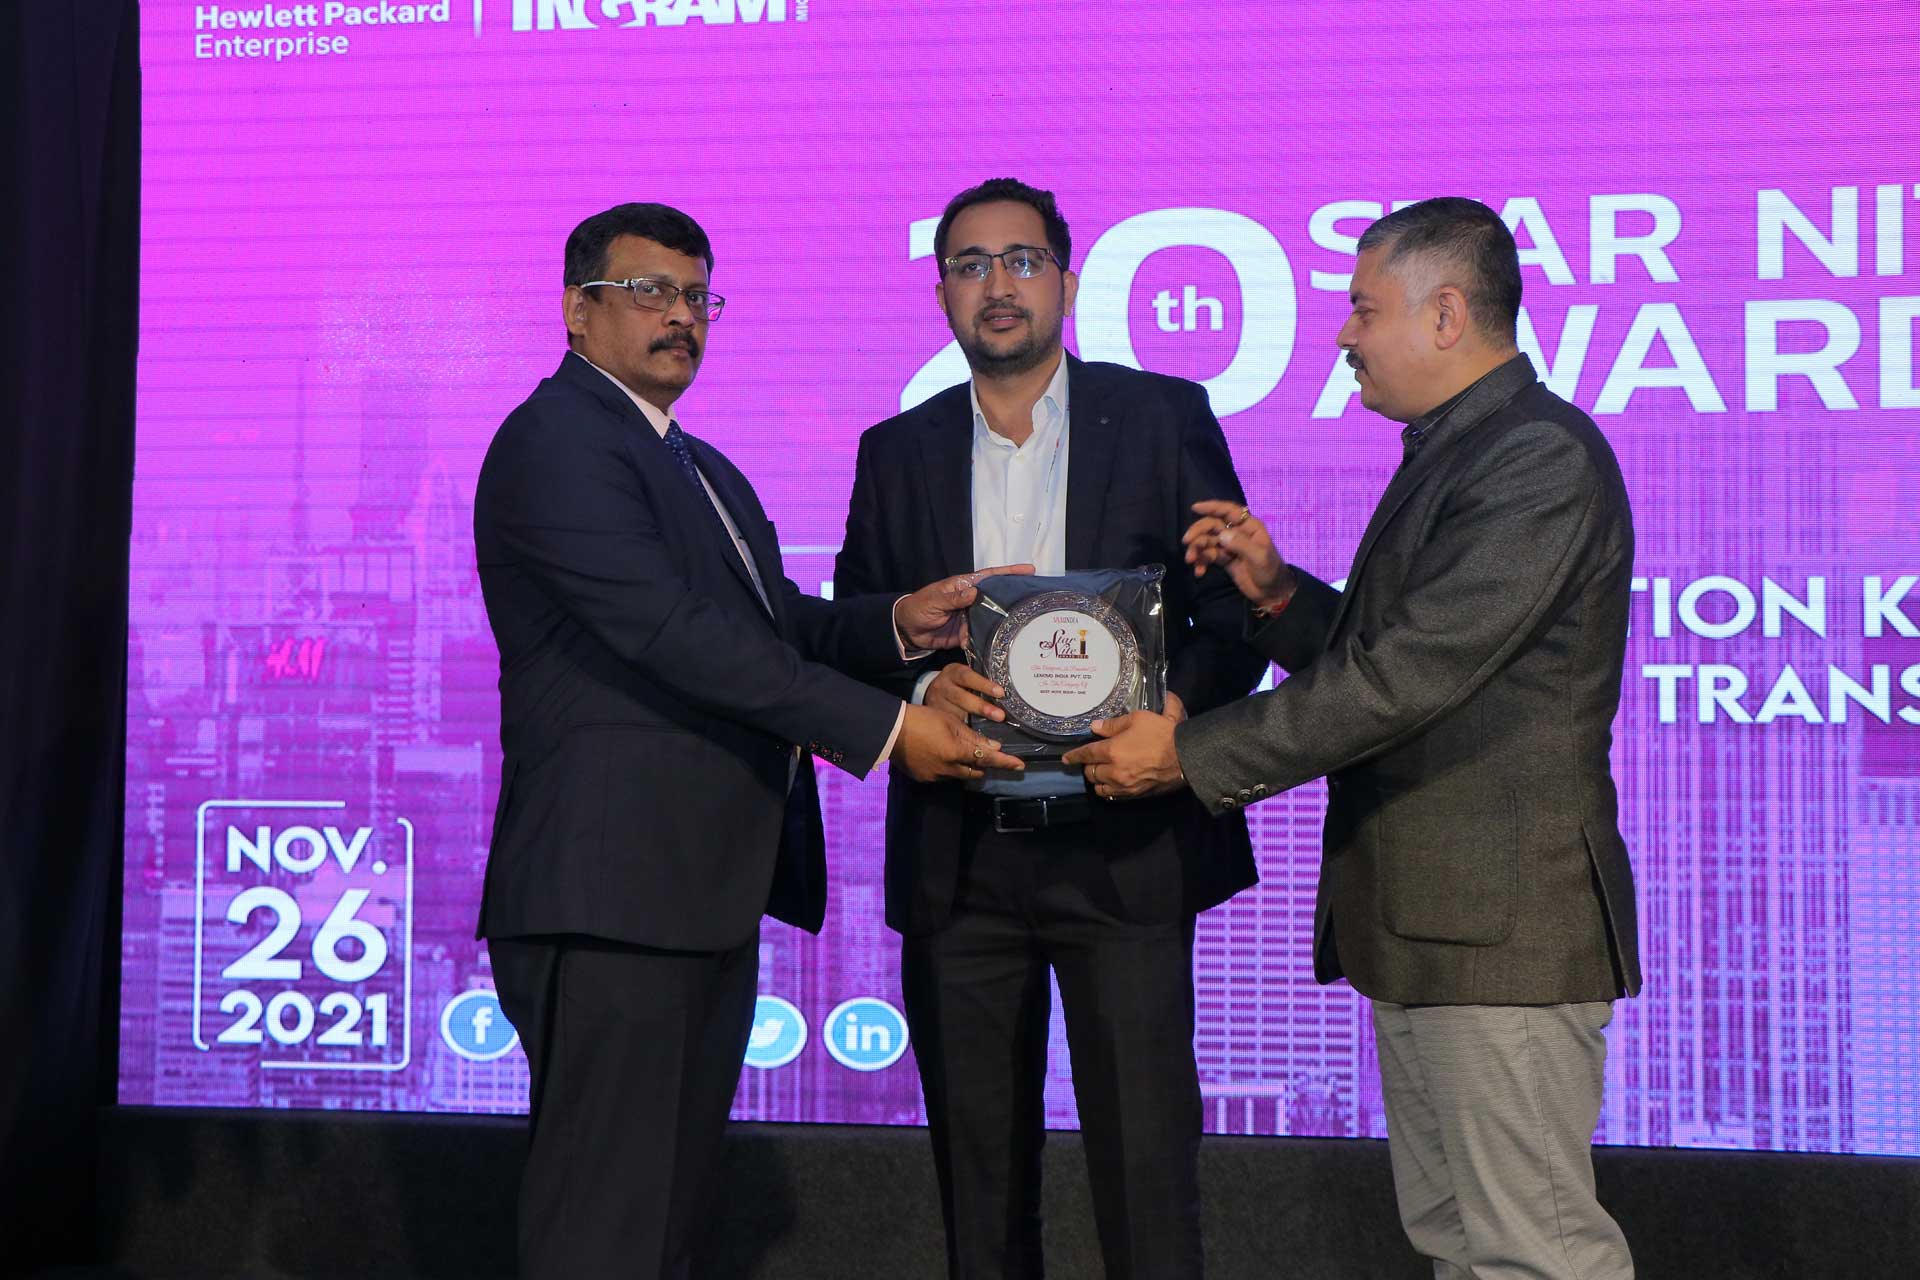 Best Note Book SME Award goes to Lenovo India Pvt Ltd at 20th Star Nite Awards 2021